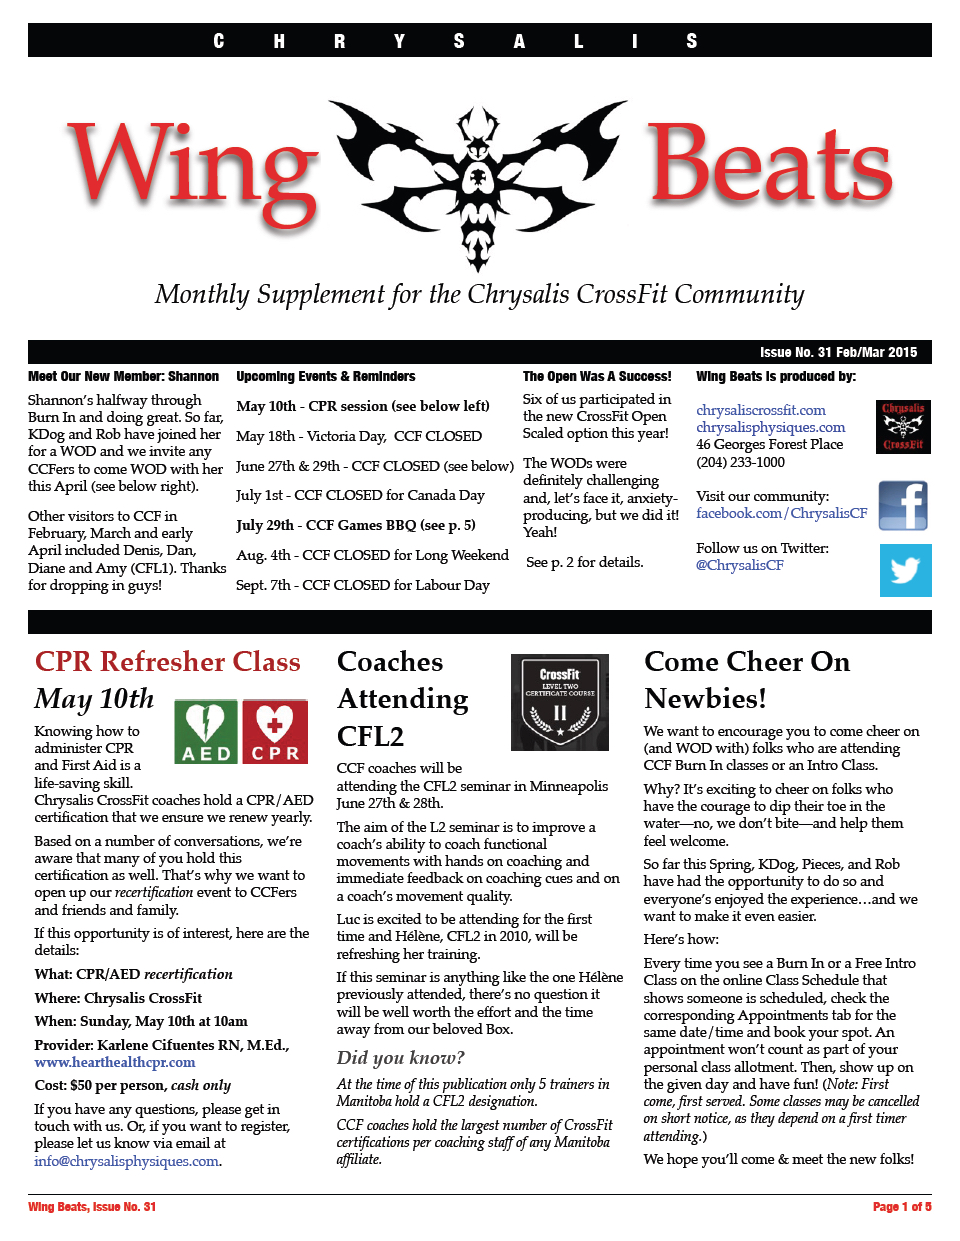 WingBeats Issue #31 - FebMar 2015